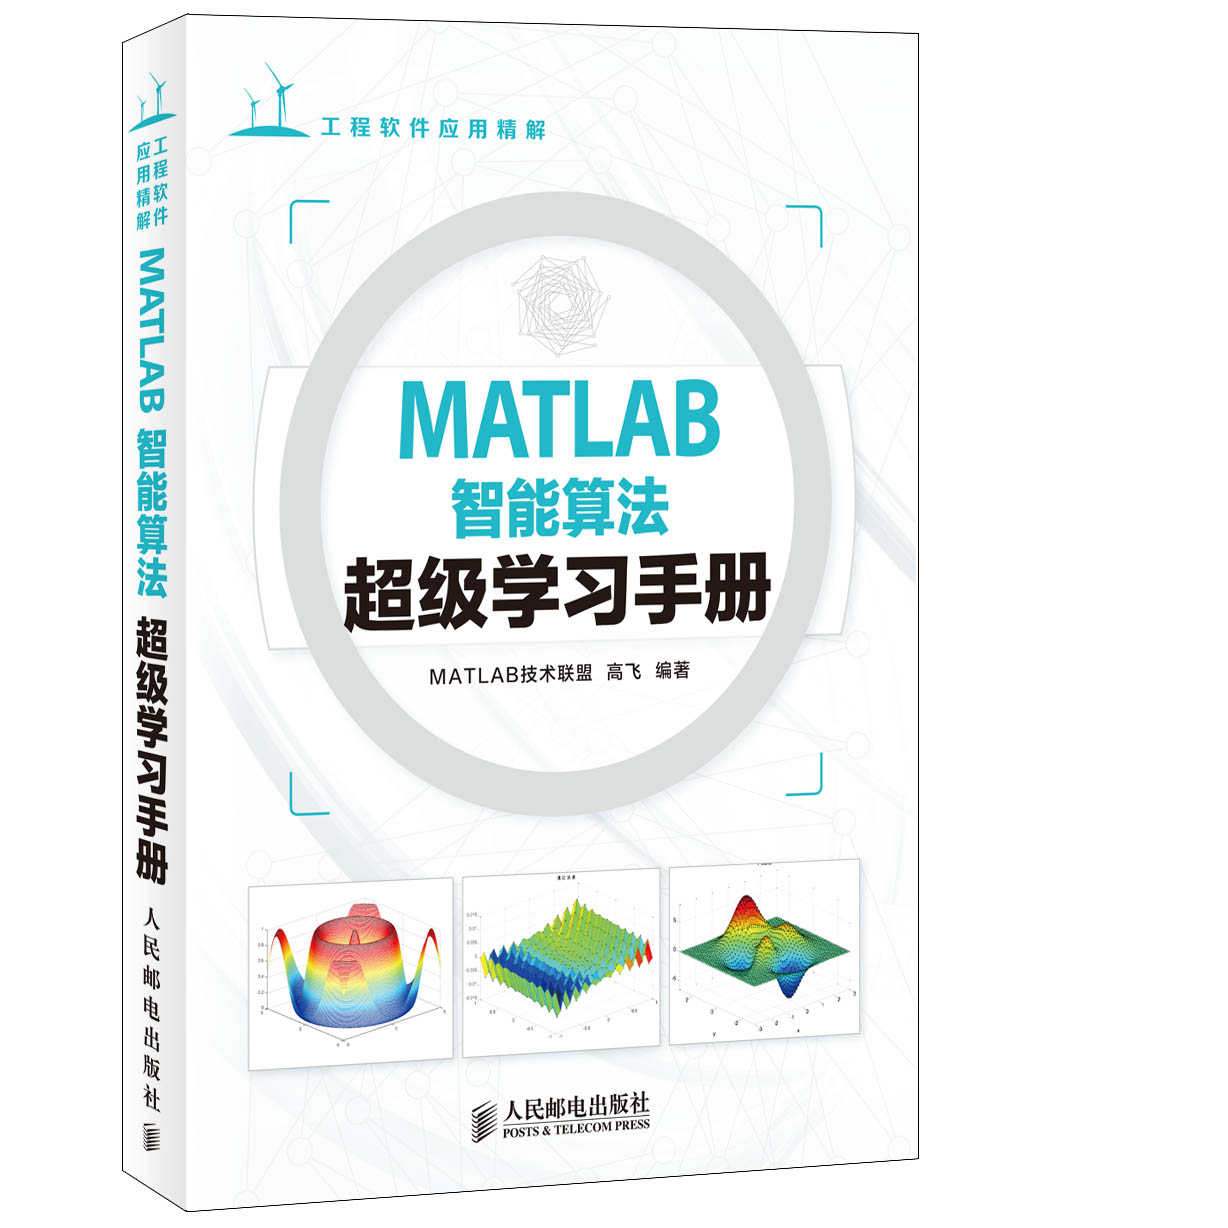 MATLAB智能算法超级学习手册 [平装]